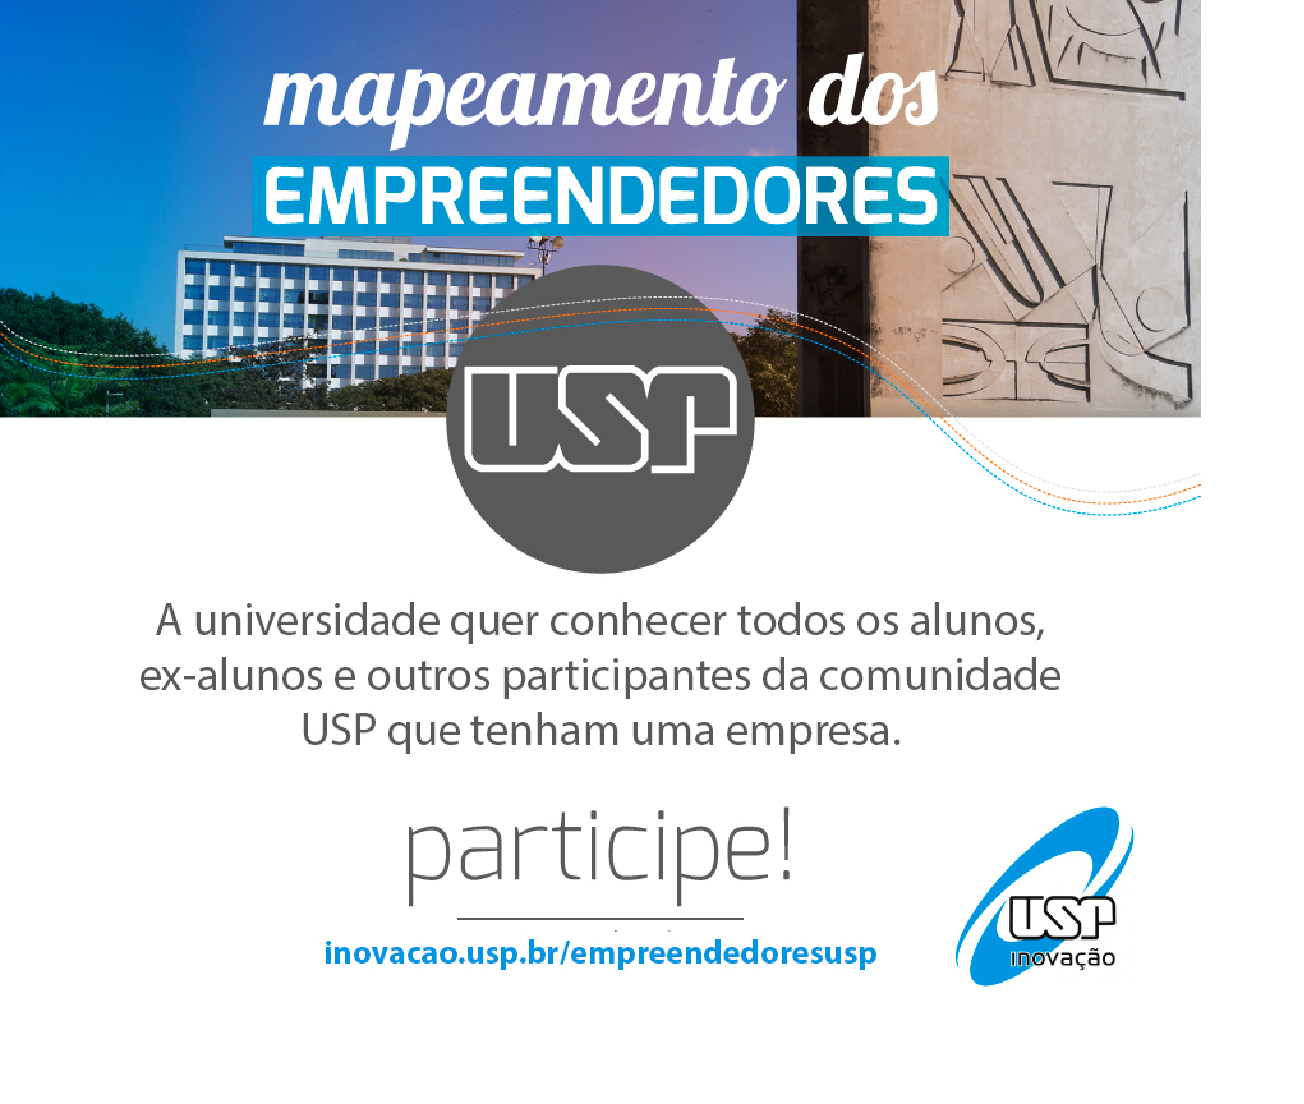 Mapeando_empreendedores-_USP_Inovacao